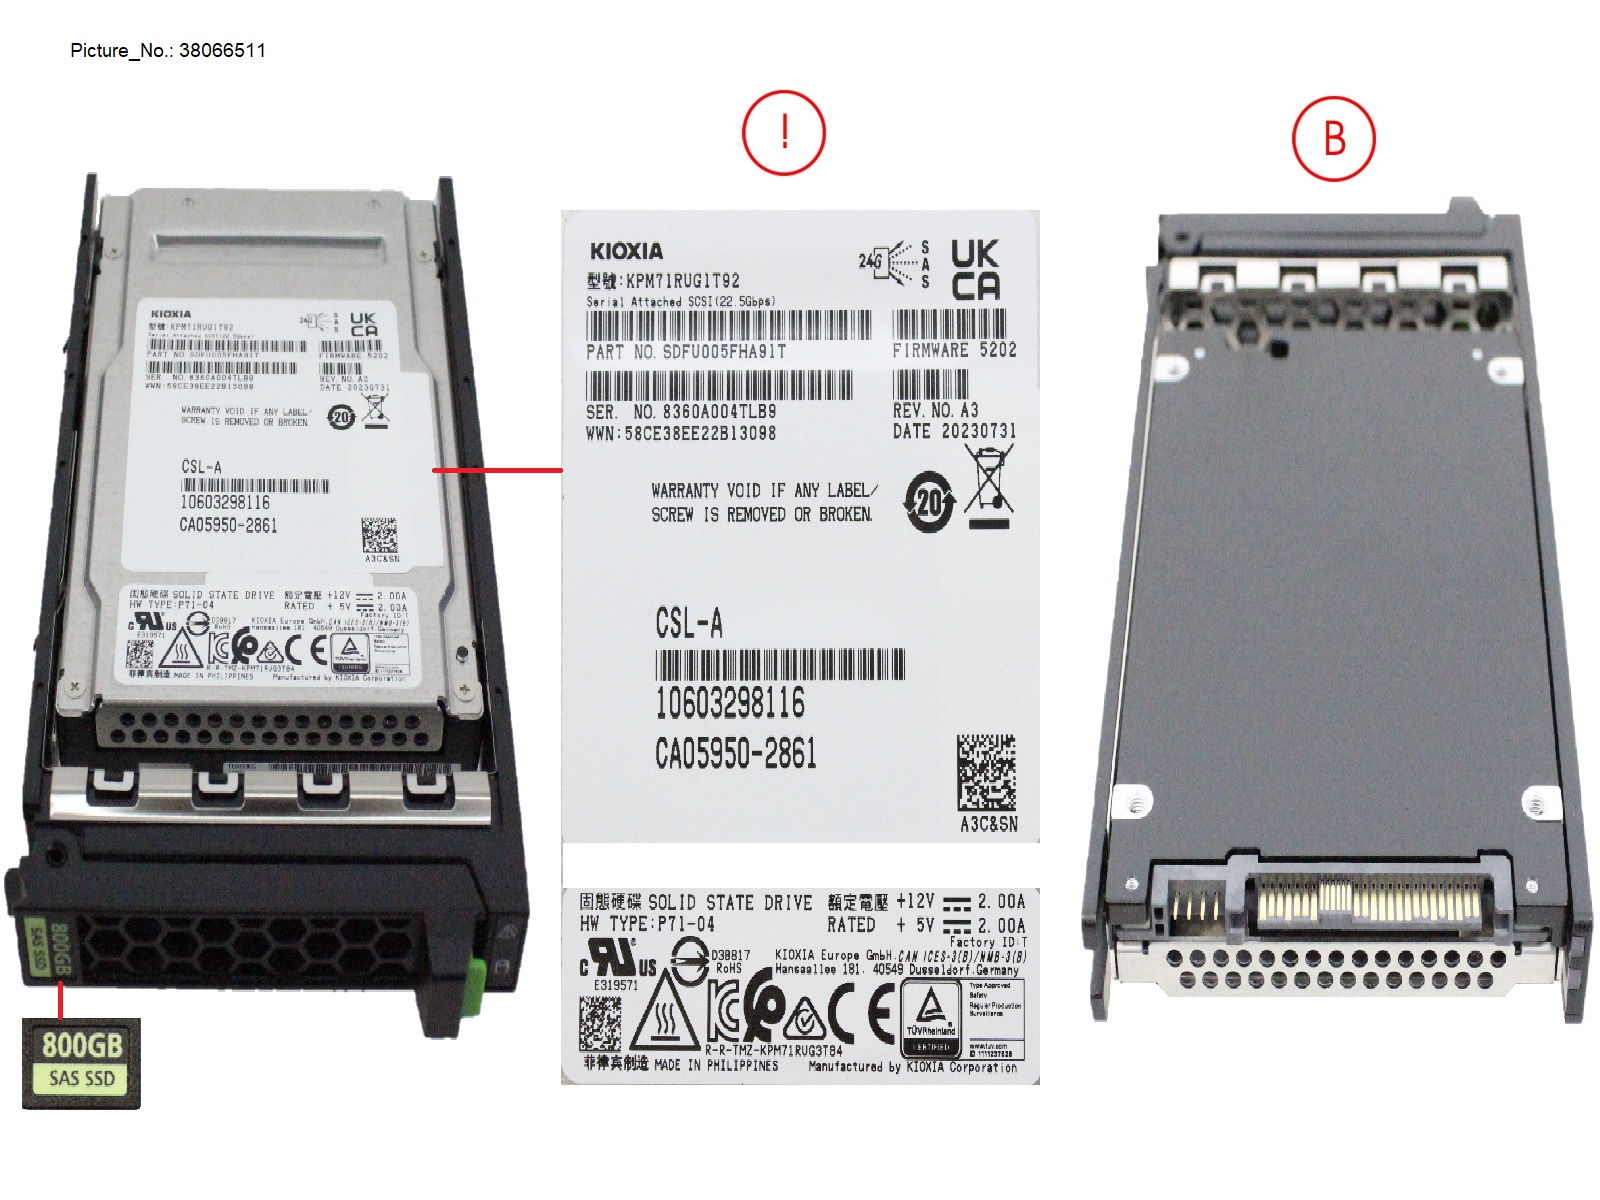 SSD SAS 24G WI 800GB IN SFF SLIM